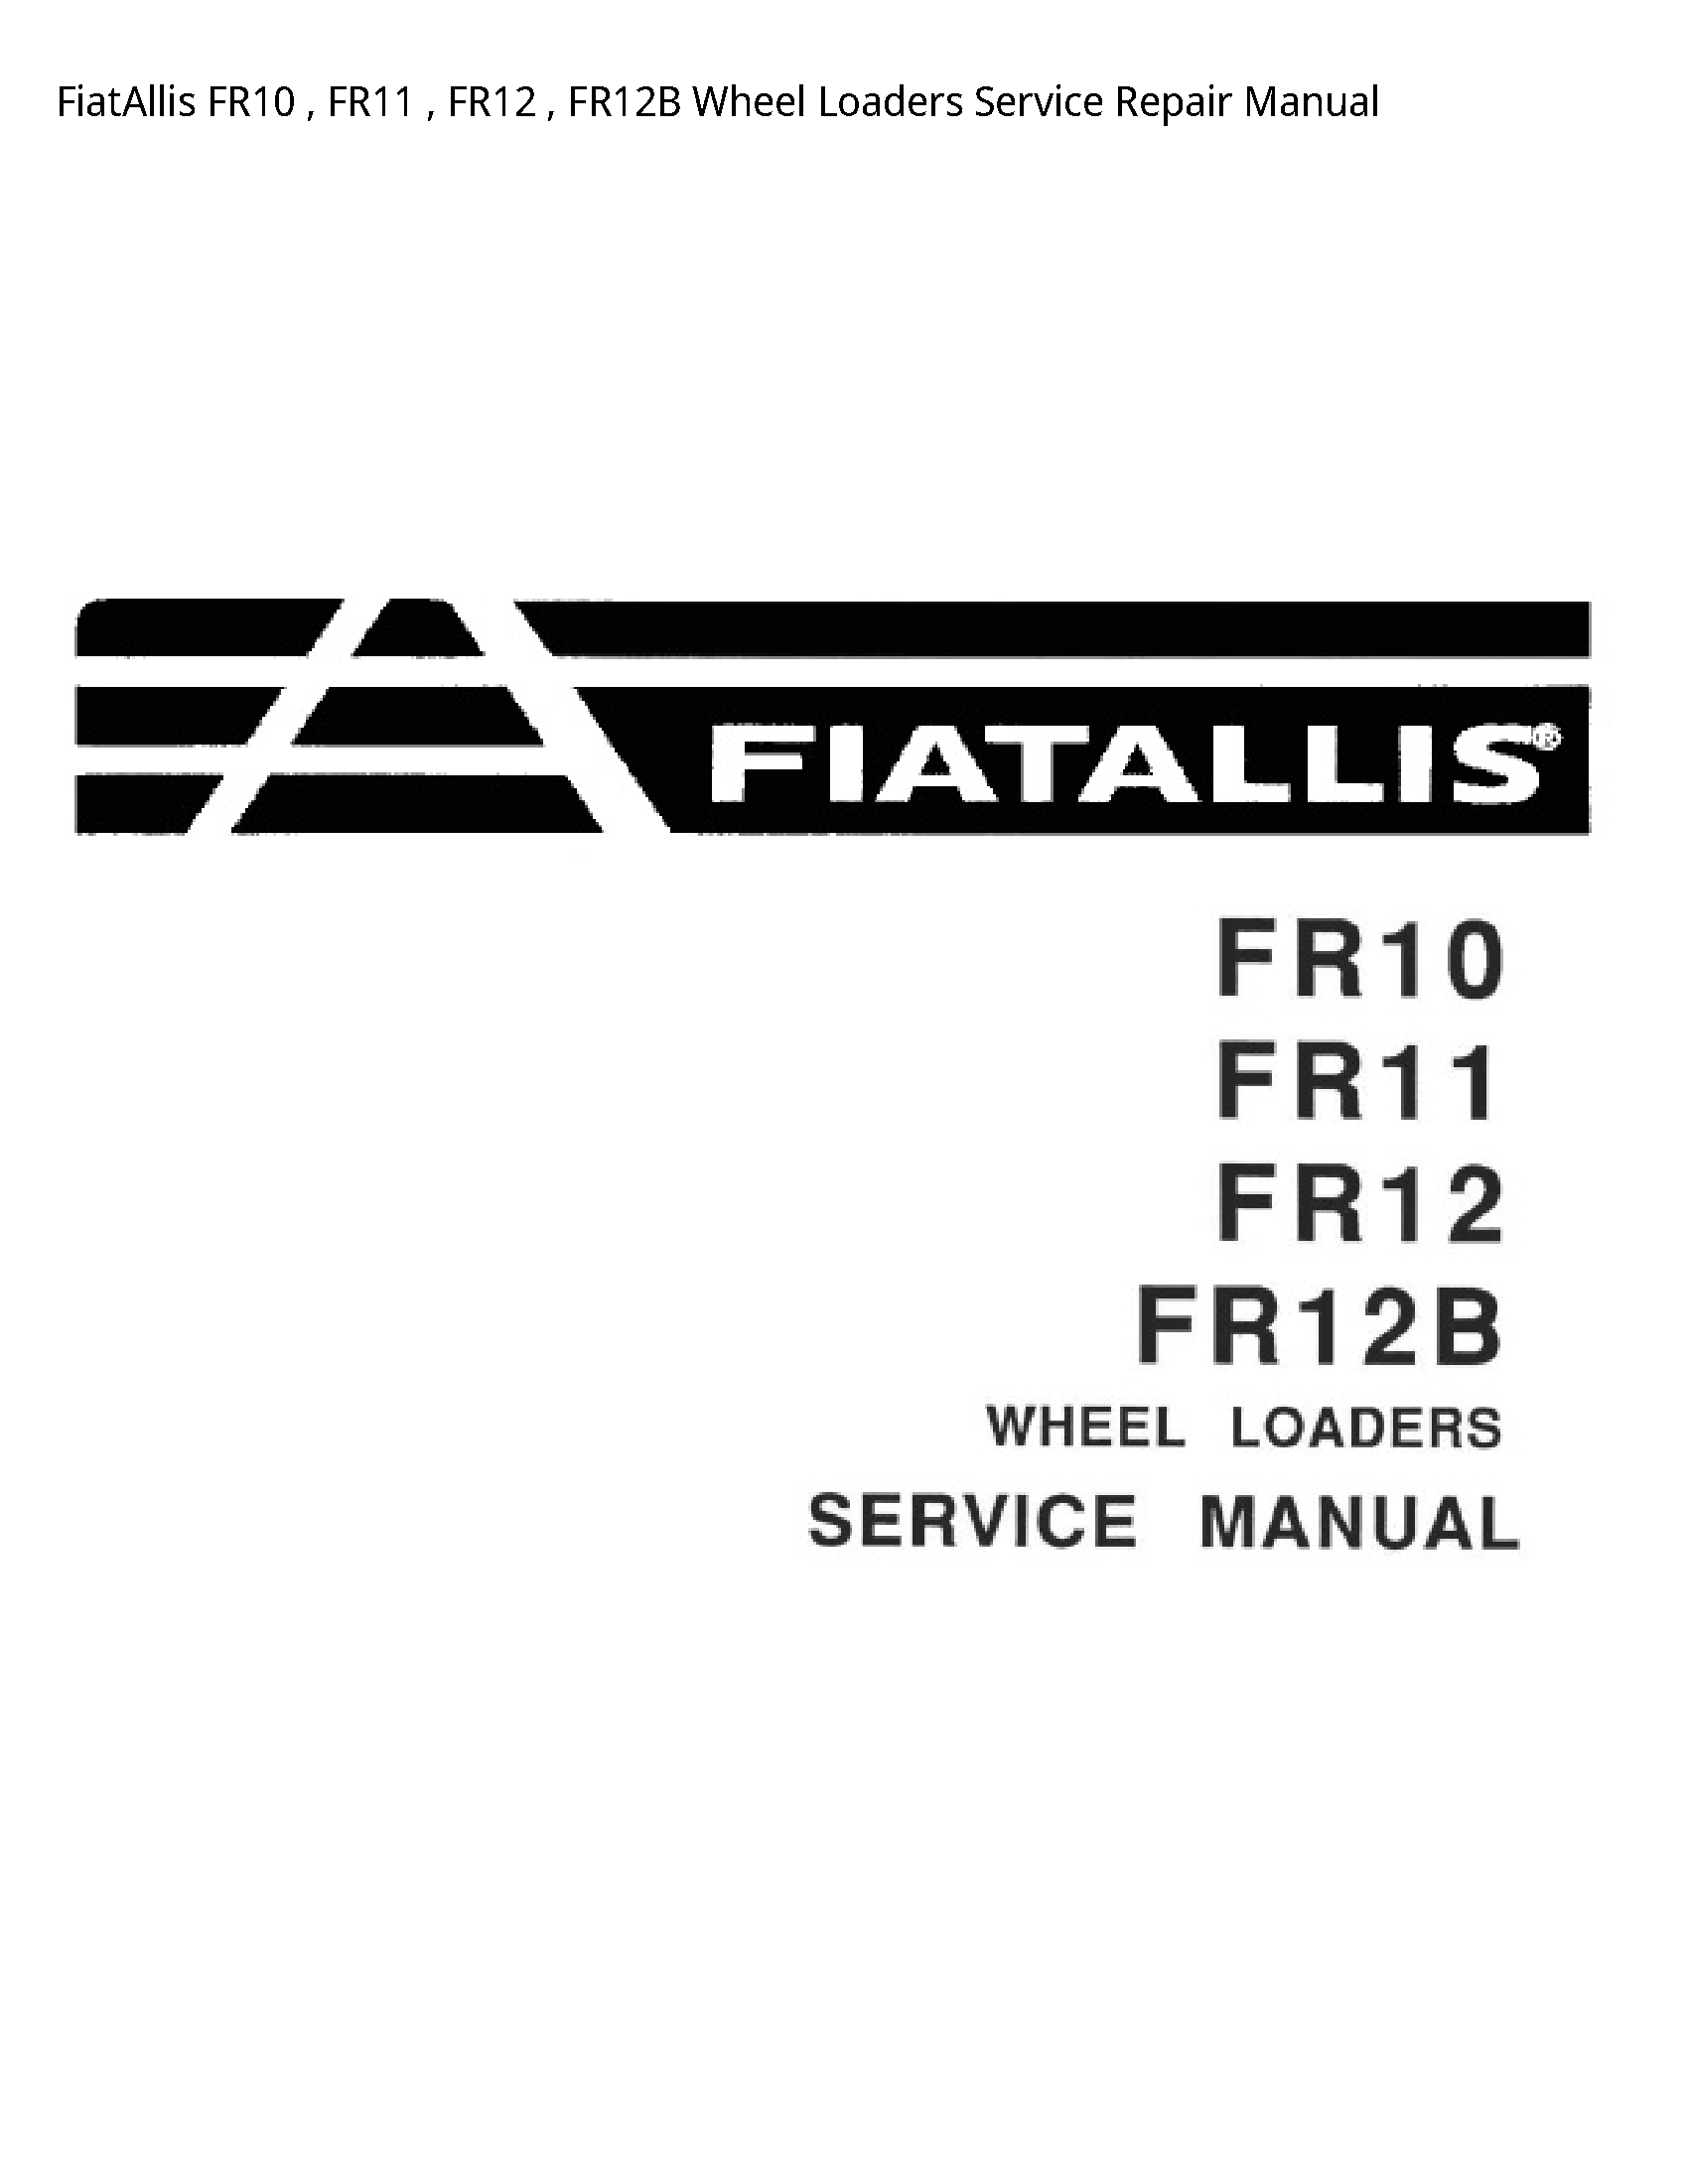 Fiatallis FR10 Wheel Loaders manual